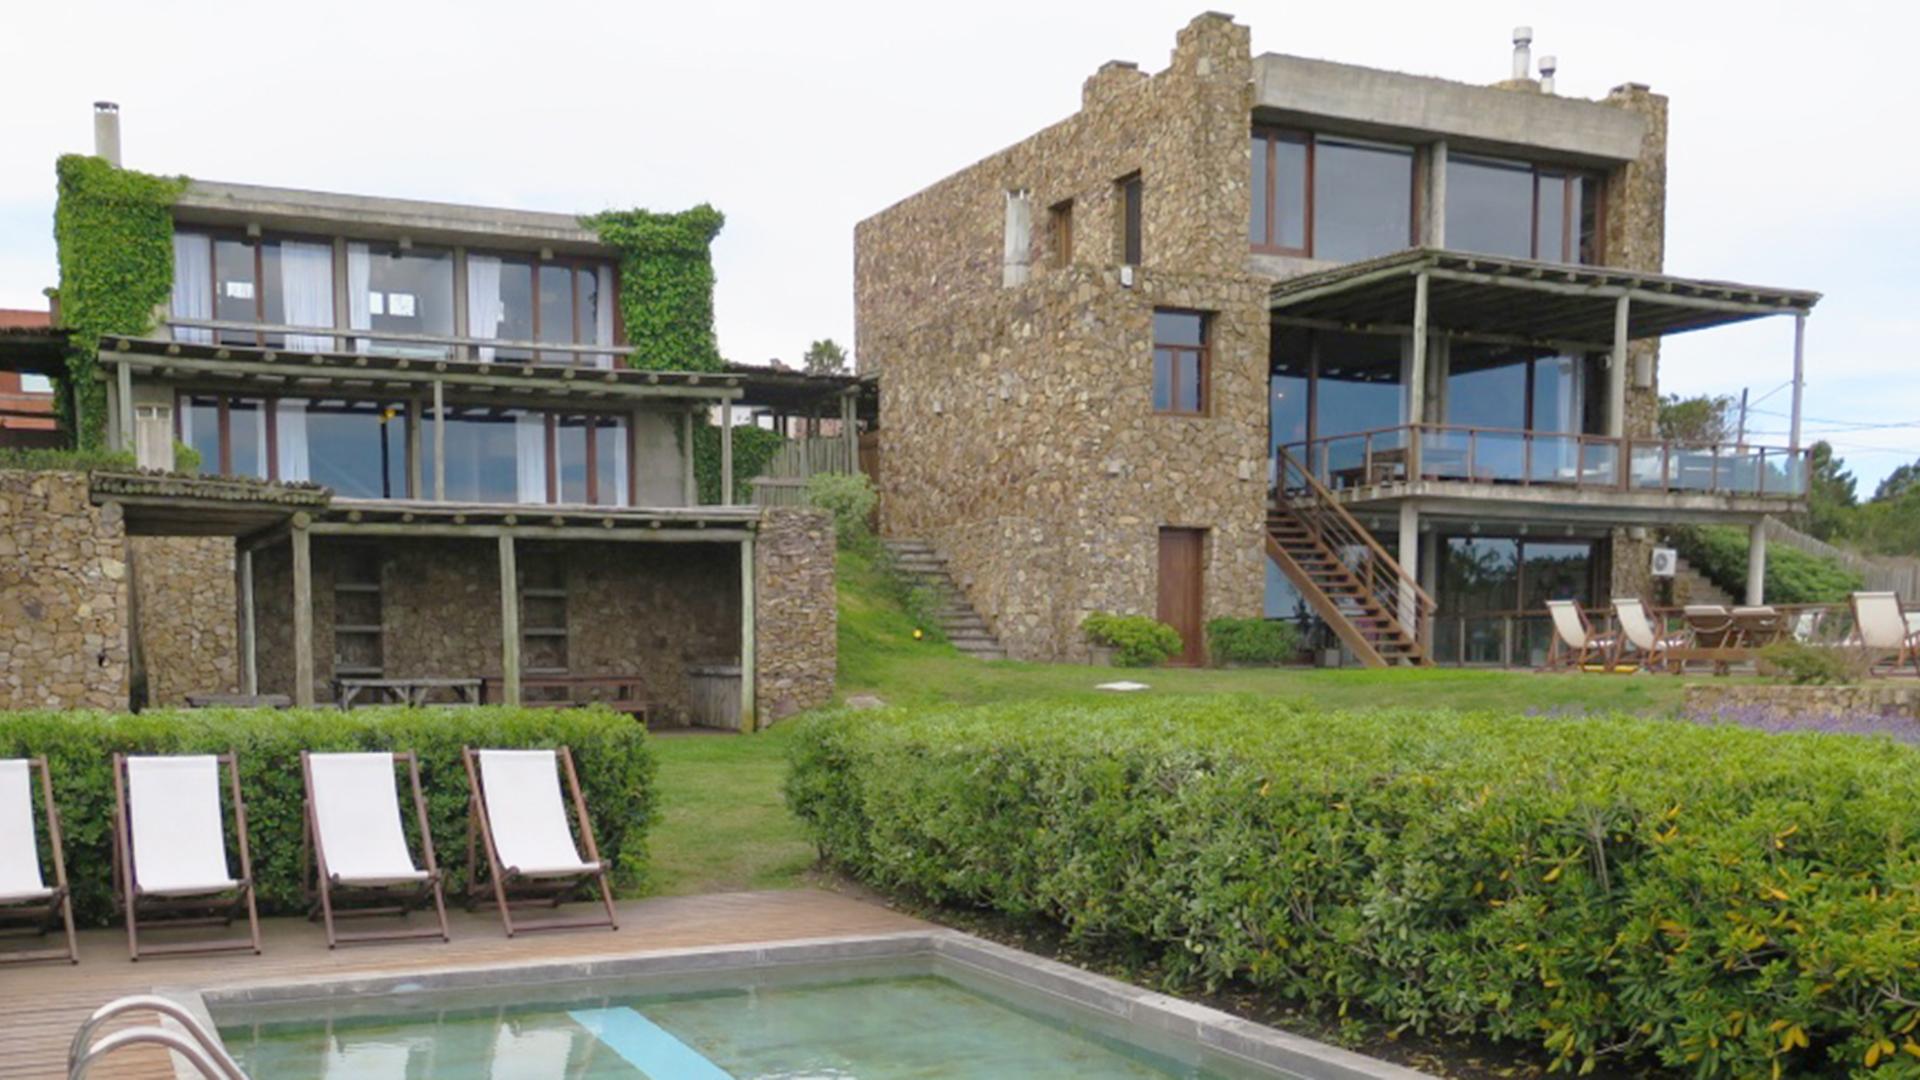 Outstanding Private House Complex  located in El Chorro, Punta del Este, Uruguay, listed by Curiocity Villas.